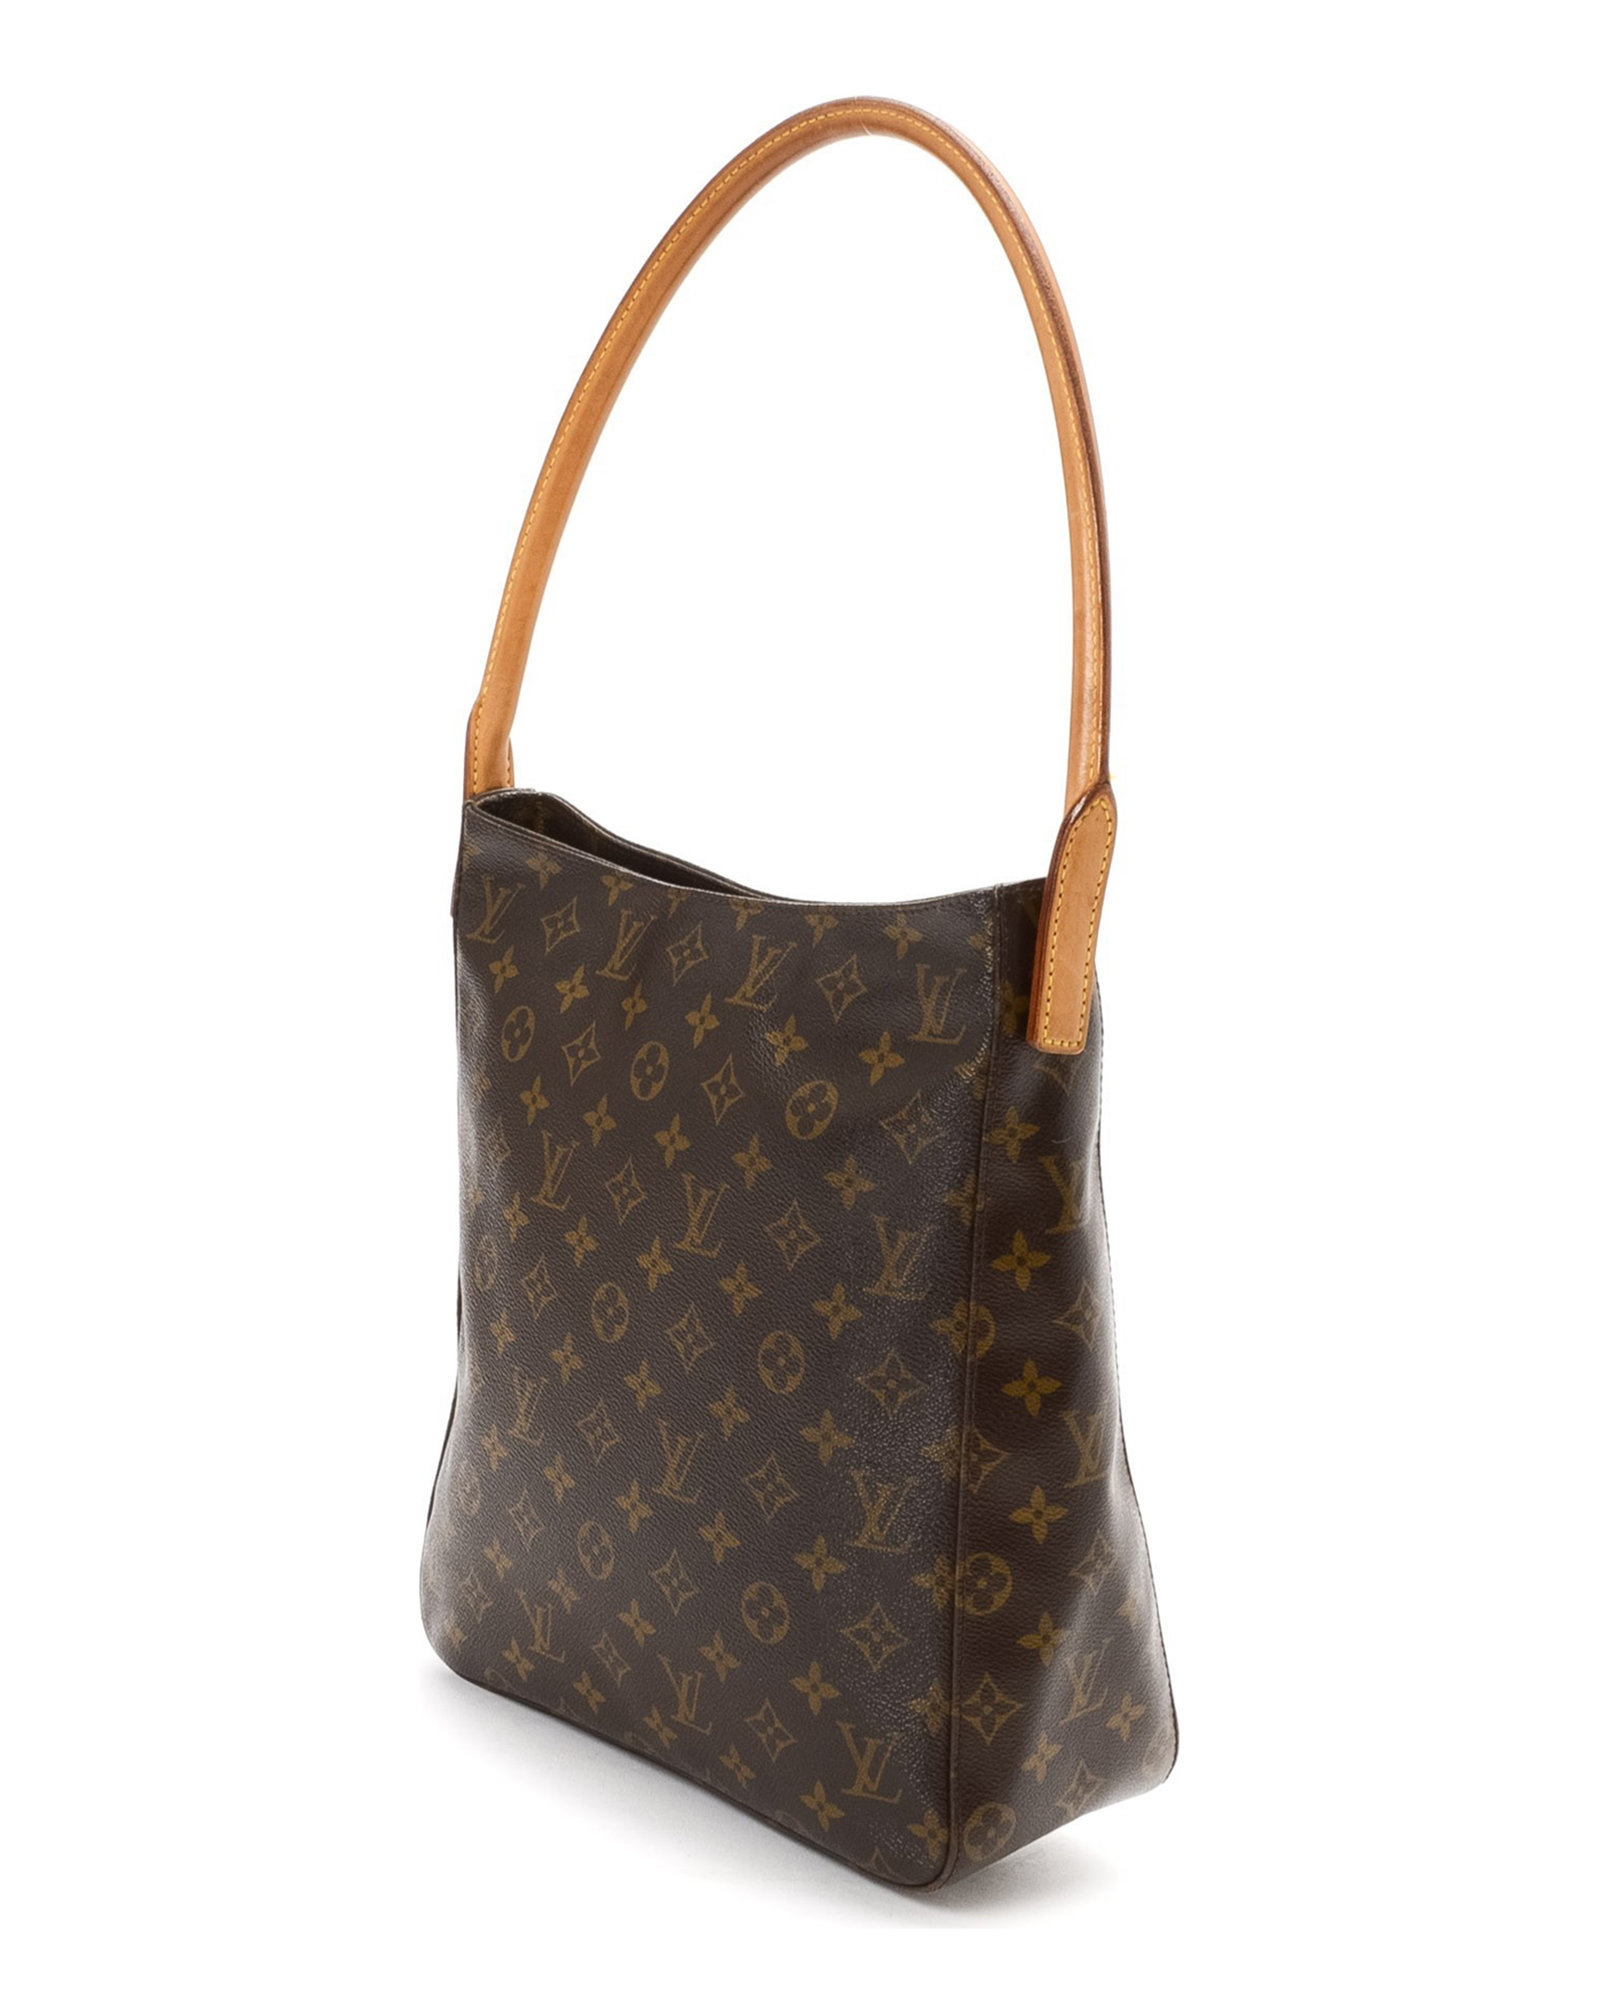 Lyst - Louis Vuitton Shoulder Bag - Vintage in Brown